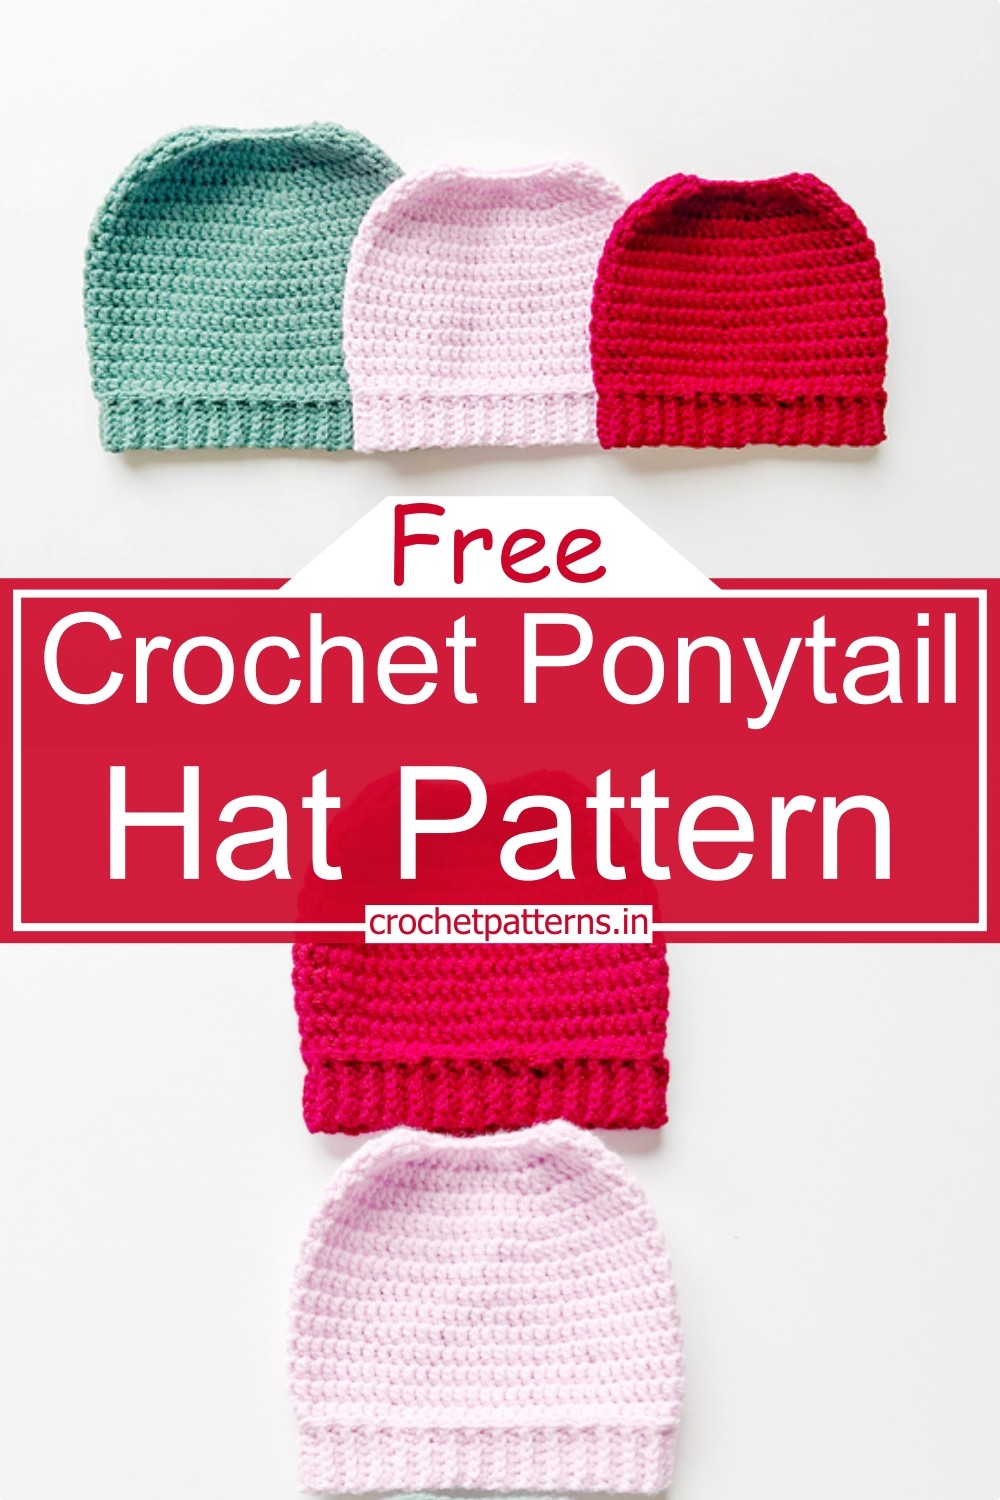 Crochet Ponytail Hat Pattern